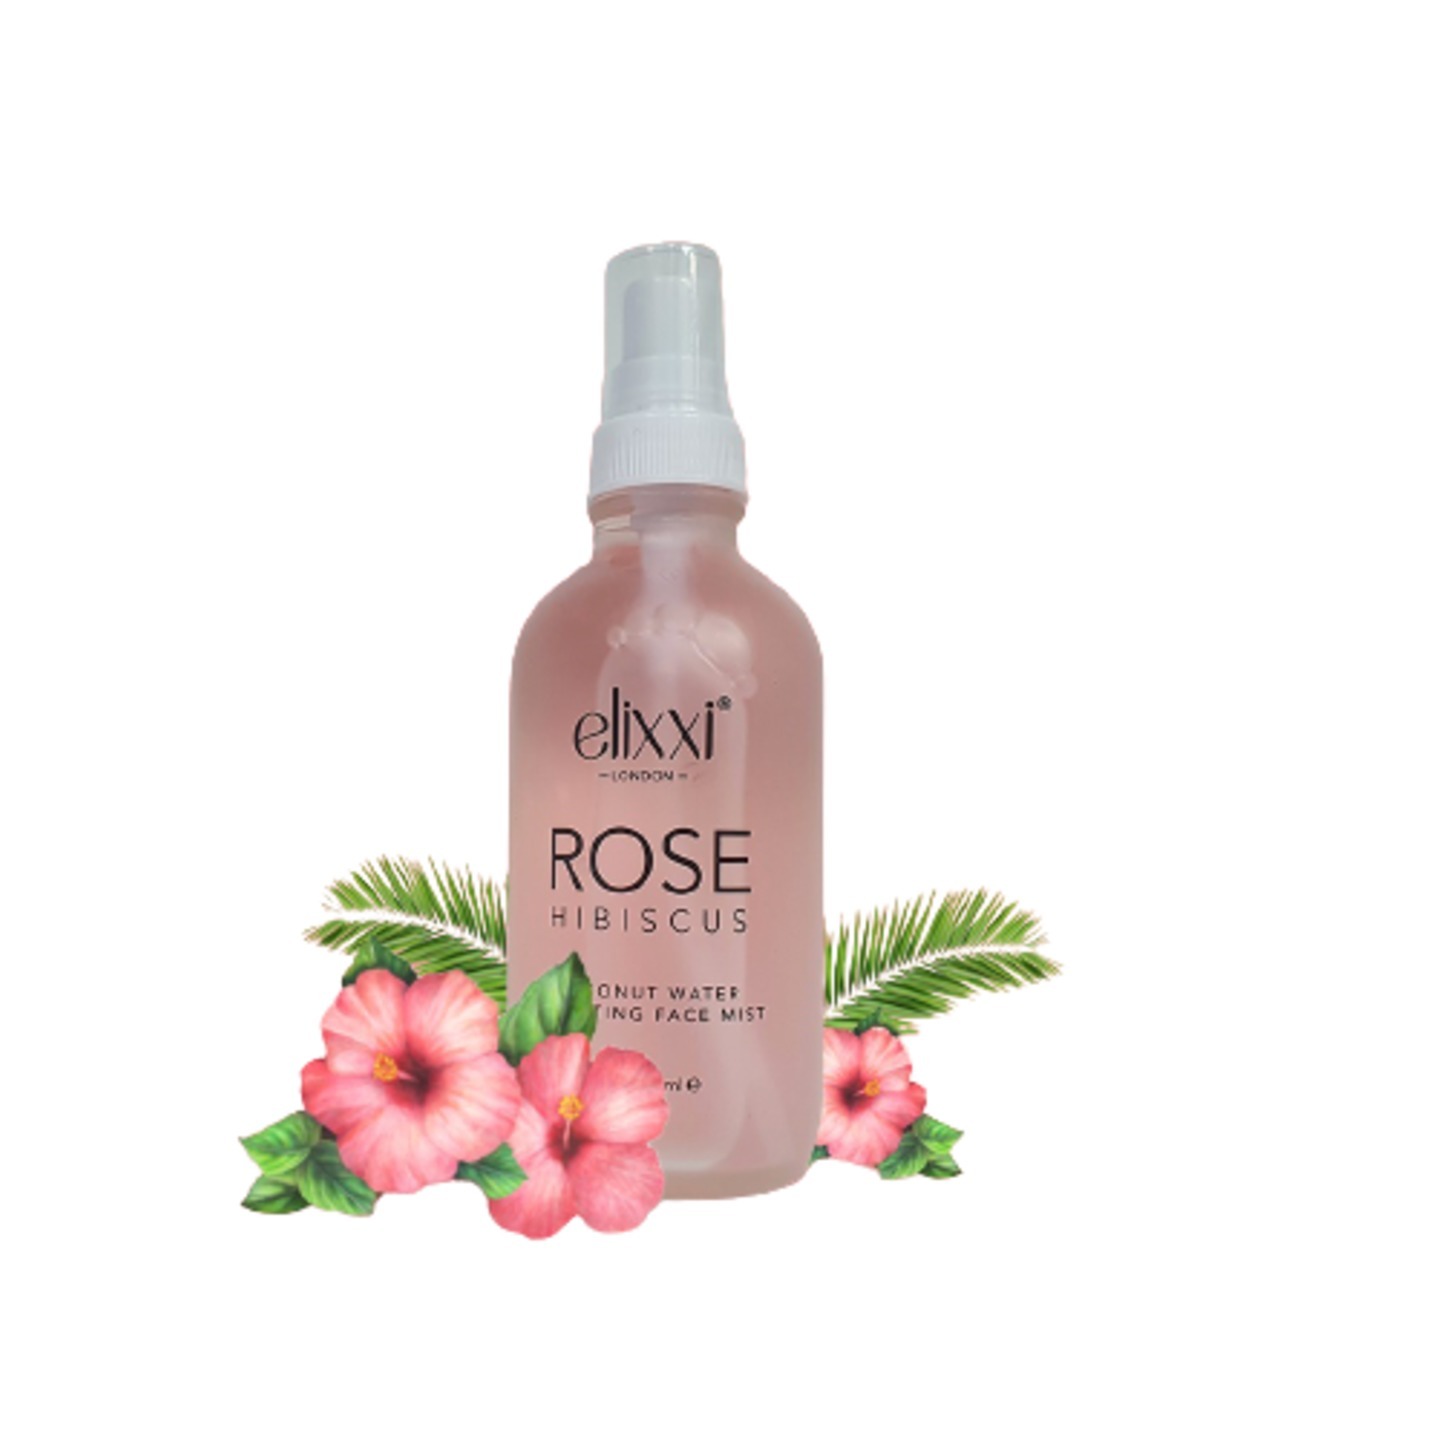 Rose Hibiscus Hydrating Face Mist Spray